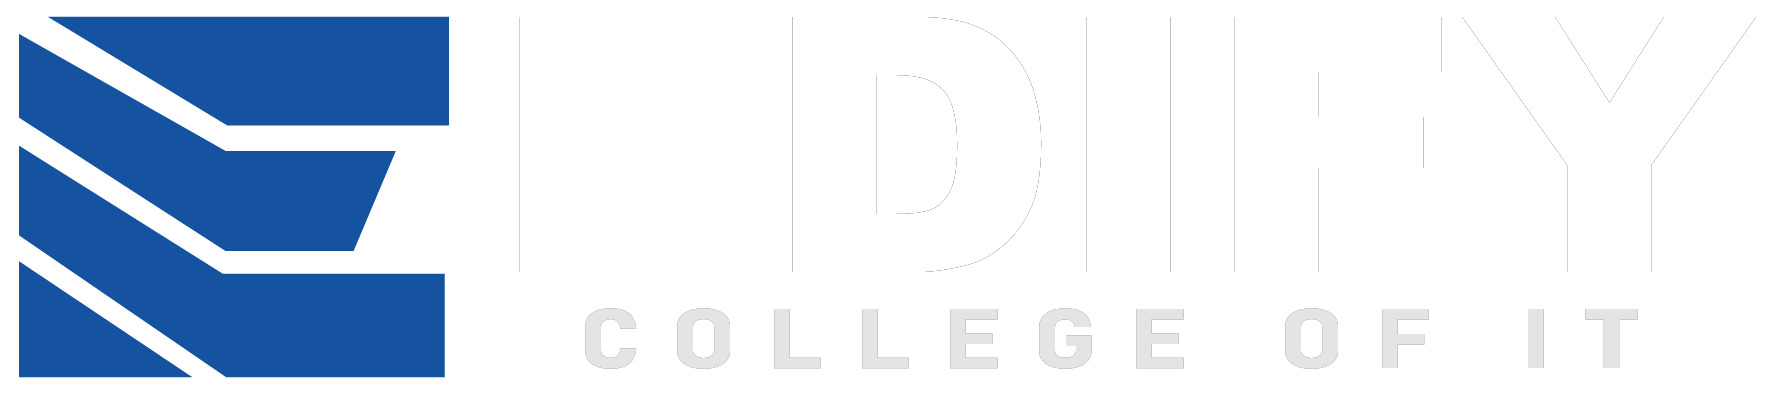 Edify College Of IT logo